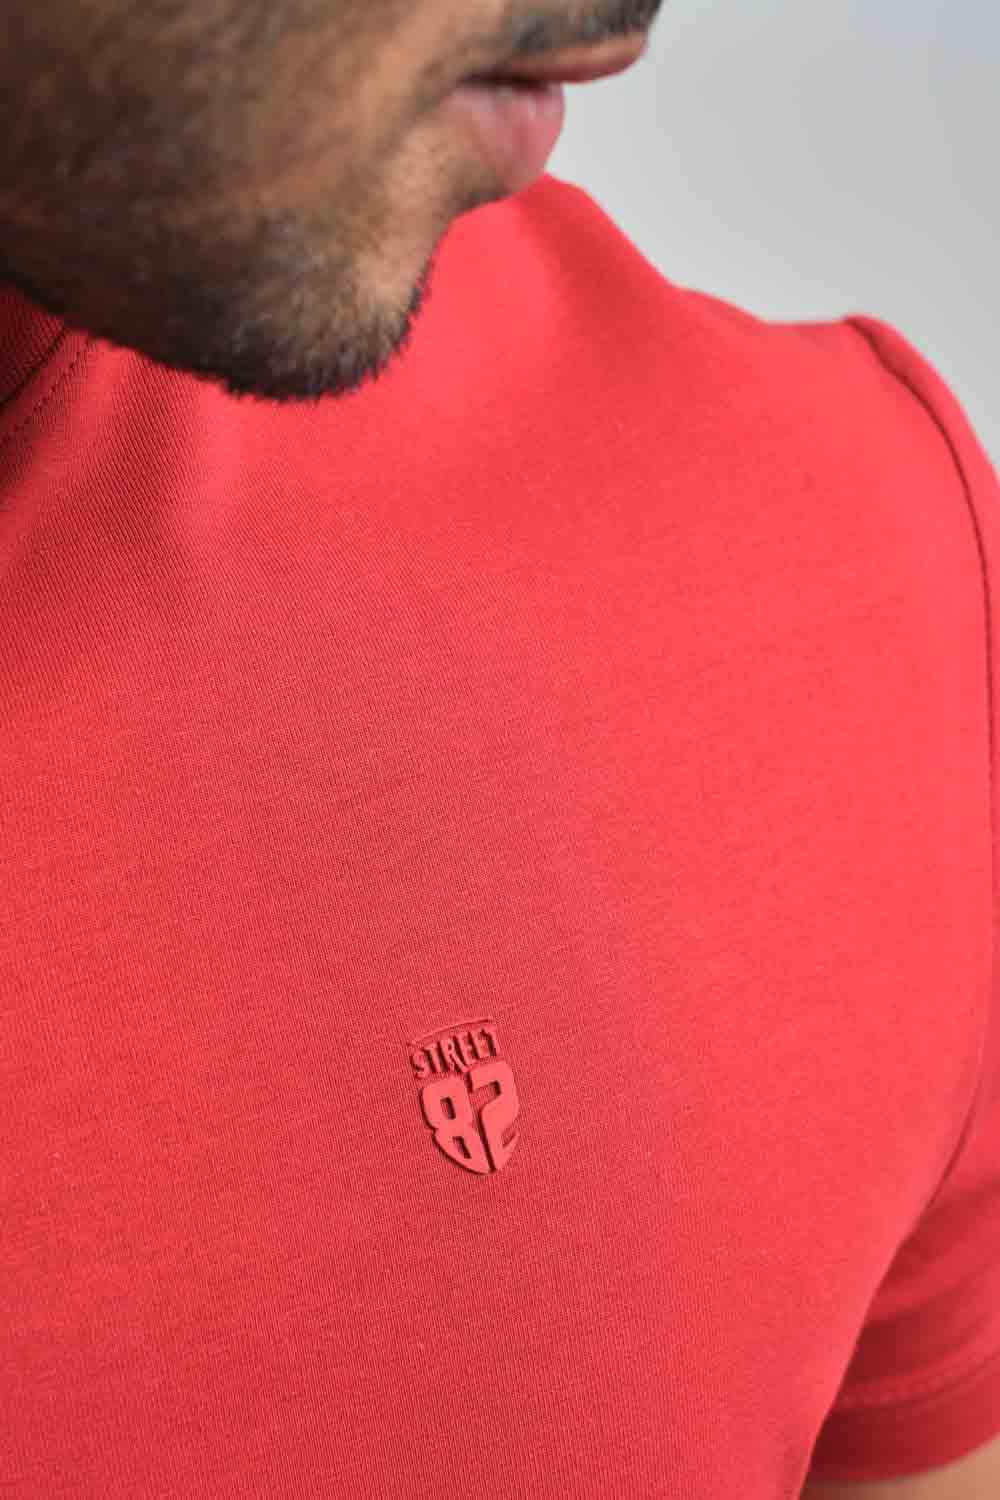 Plain Red crew neck essential t-shirt